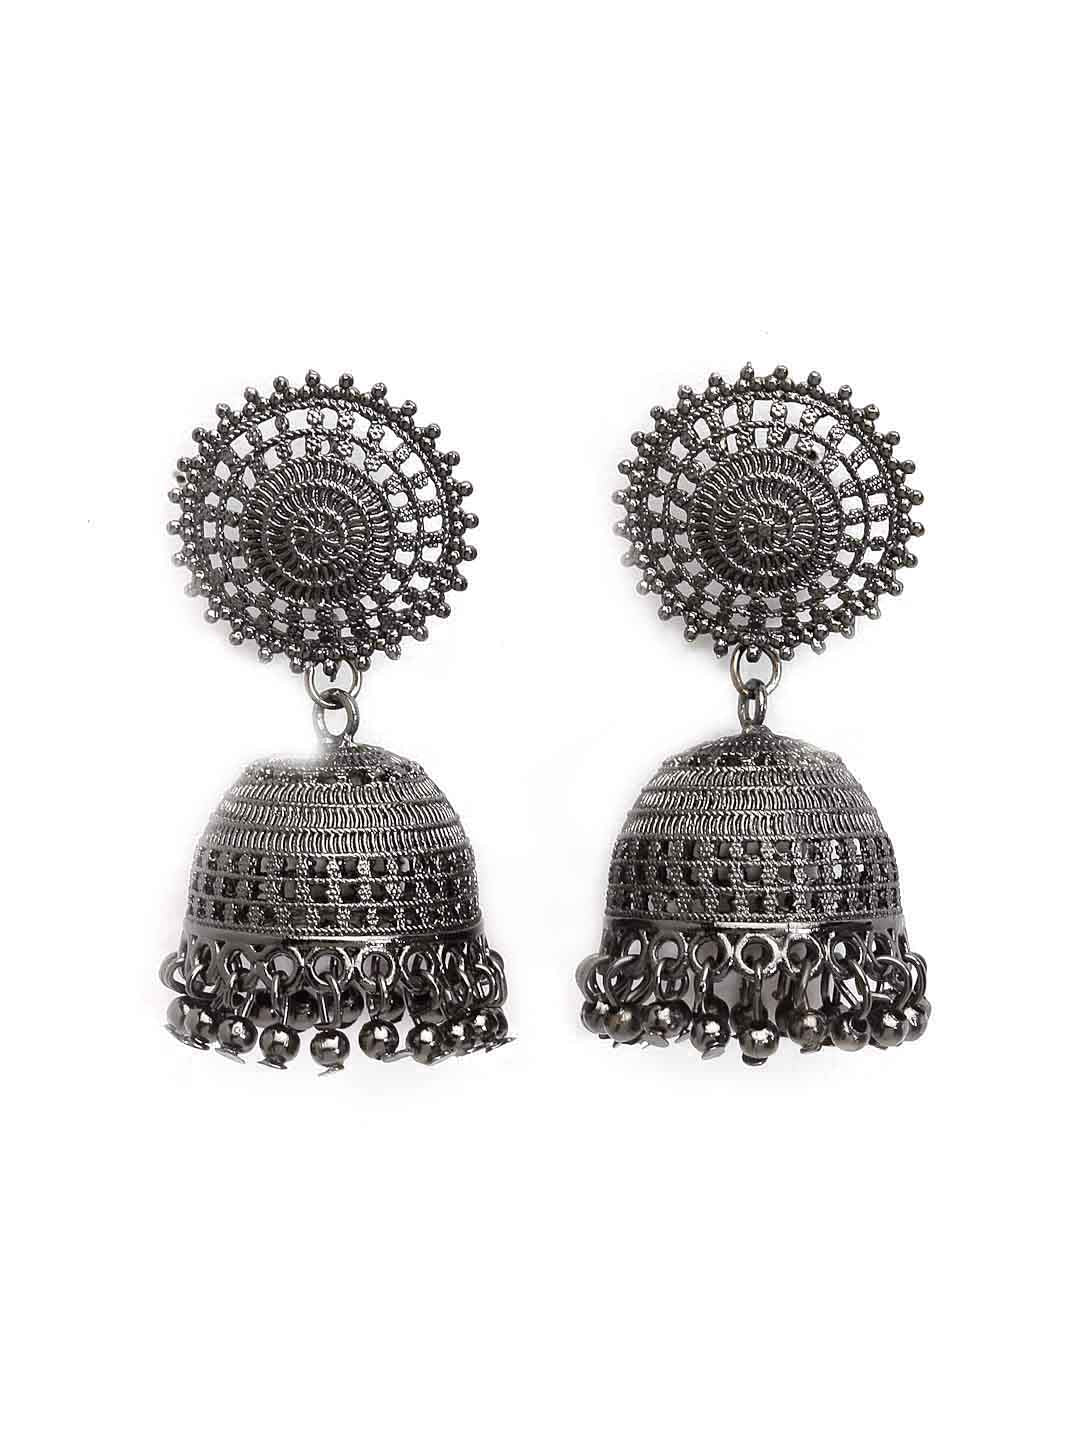 Yadeep India Metal Oxidised Silver Jhumka Earrings for Women & Girls –  yadeepjewels